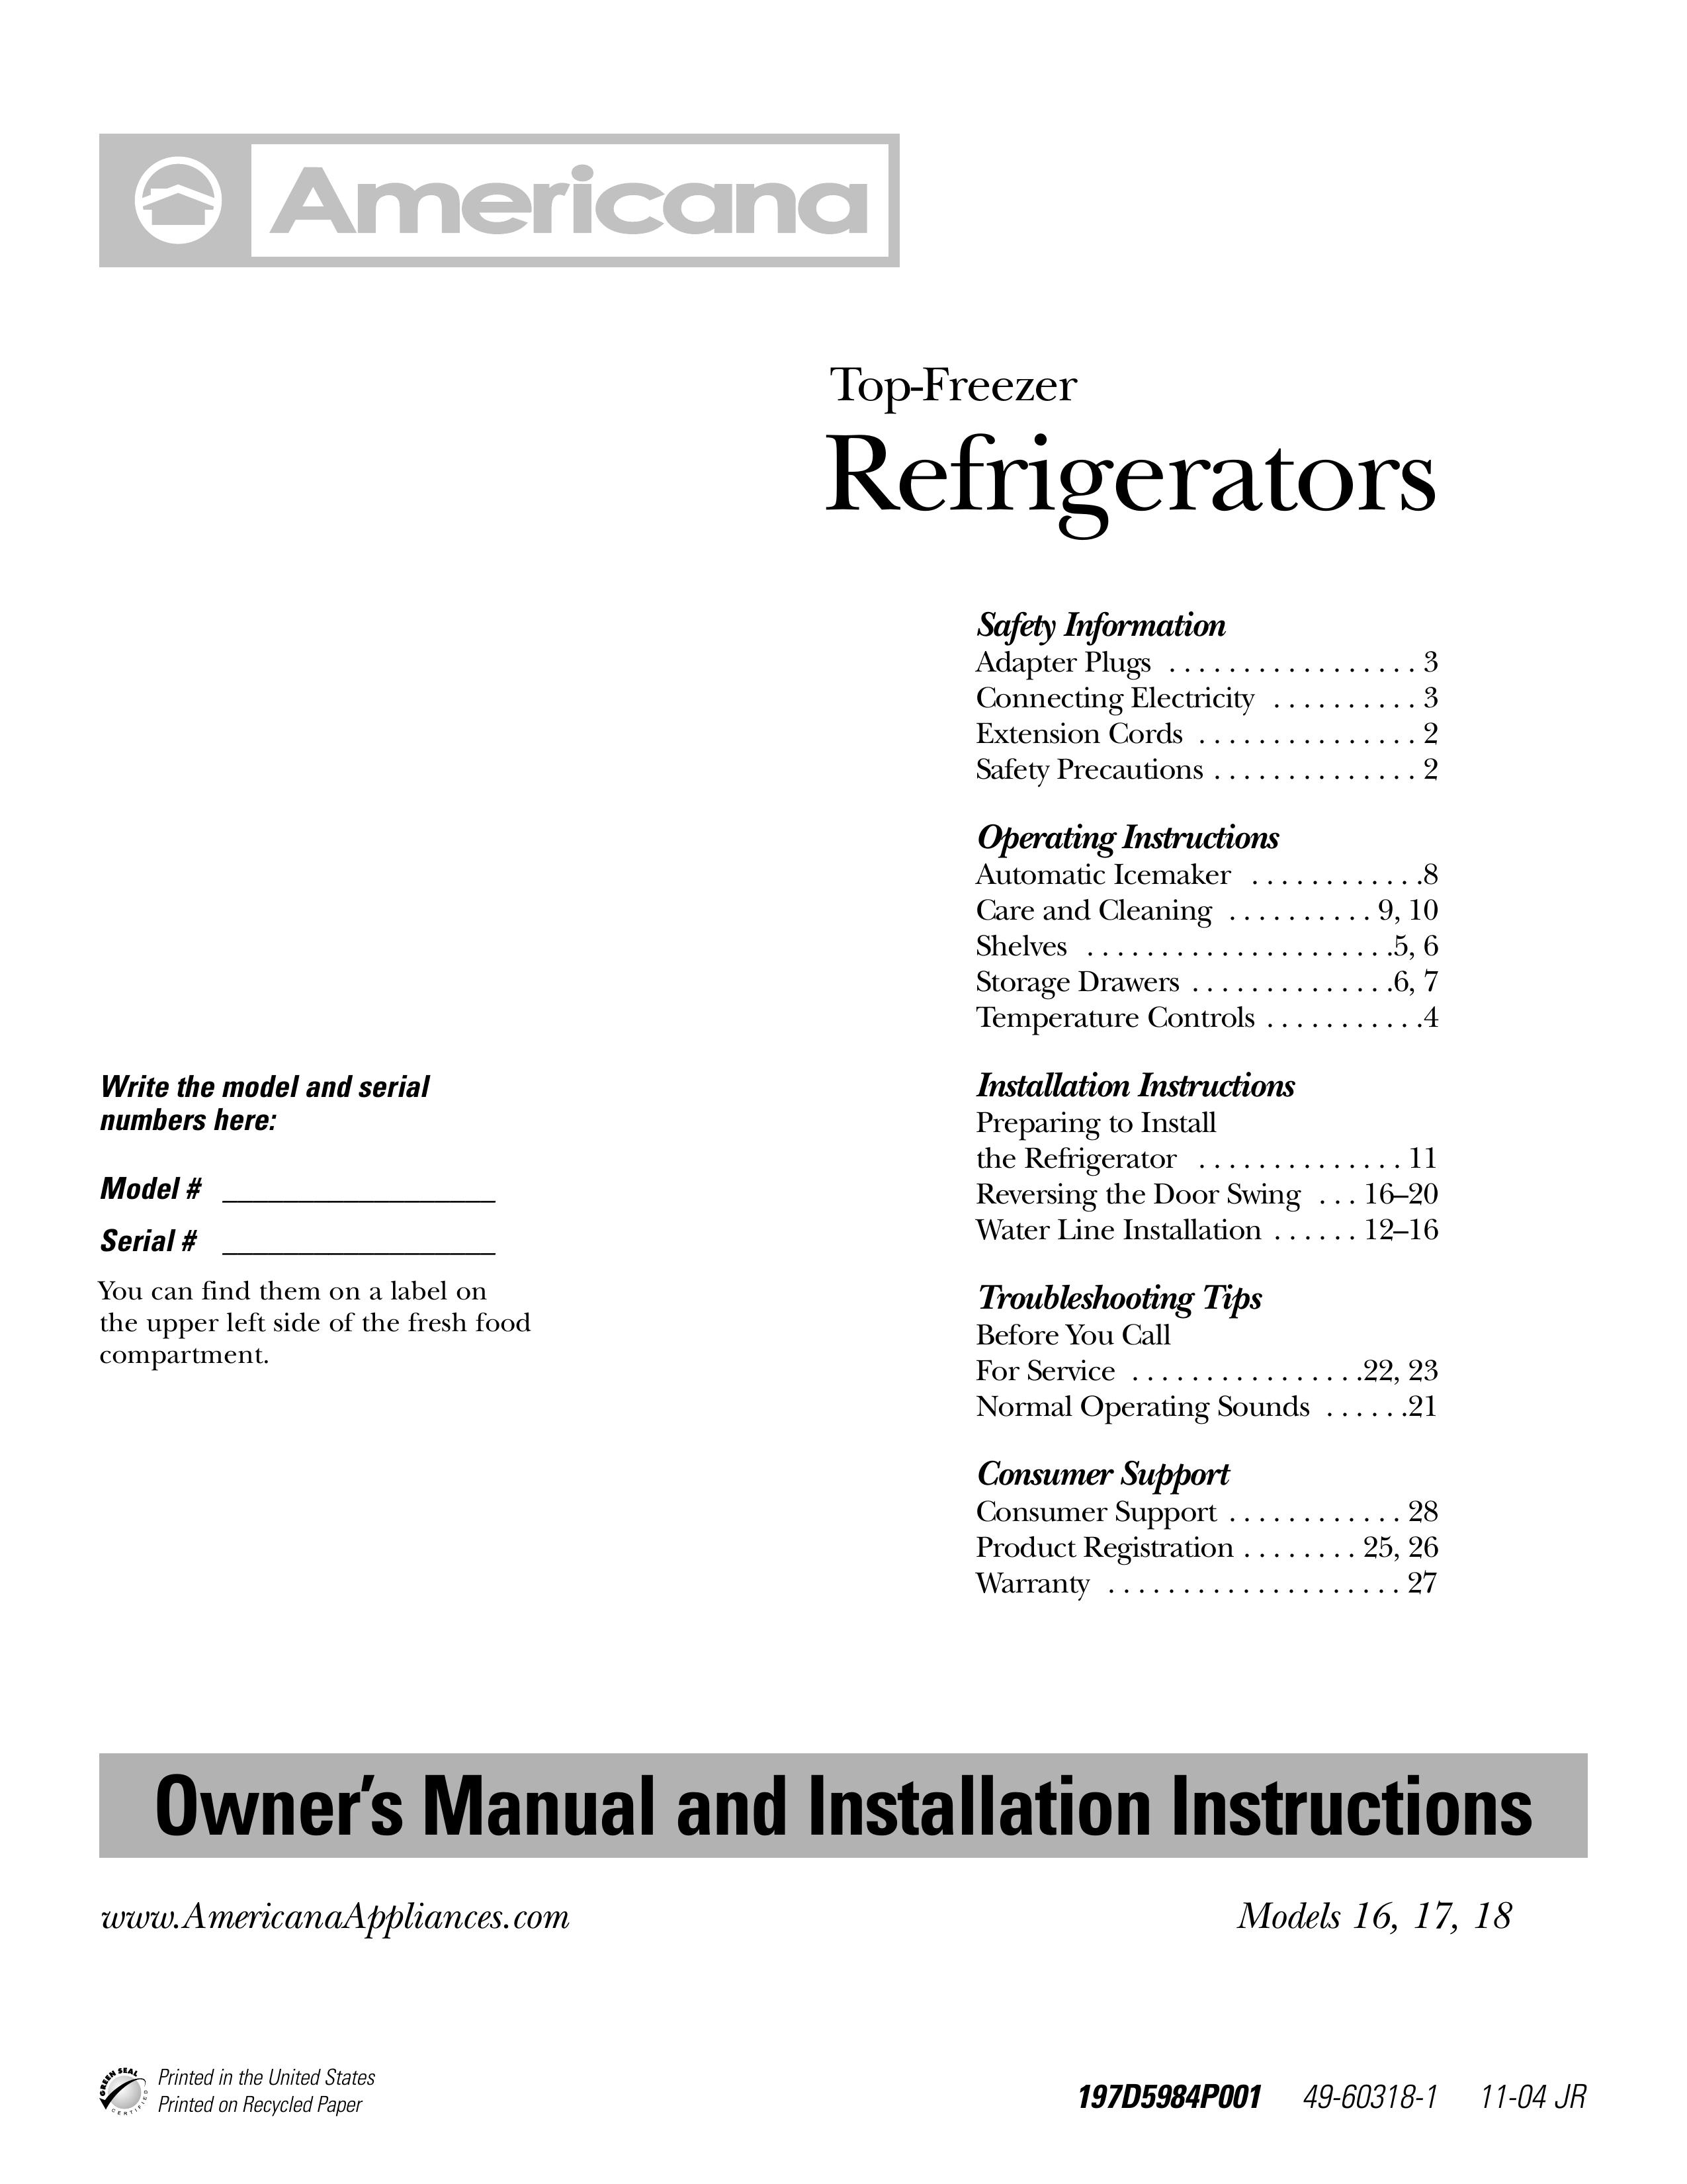 Americana Appliances 16 Refrigerator User Manual